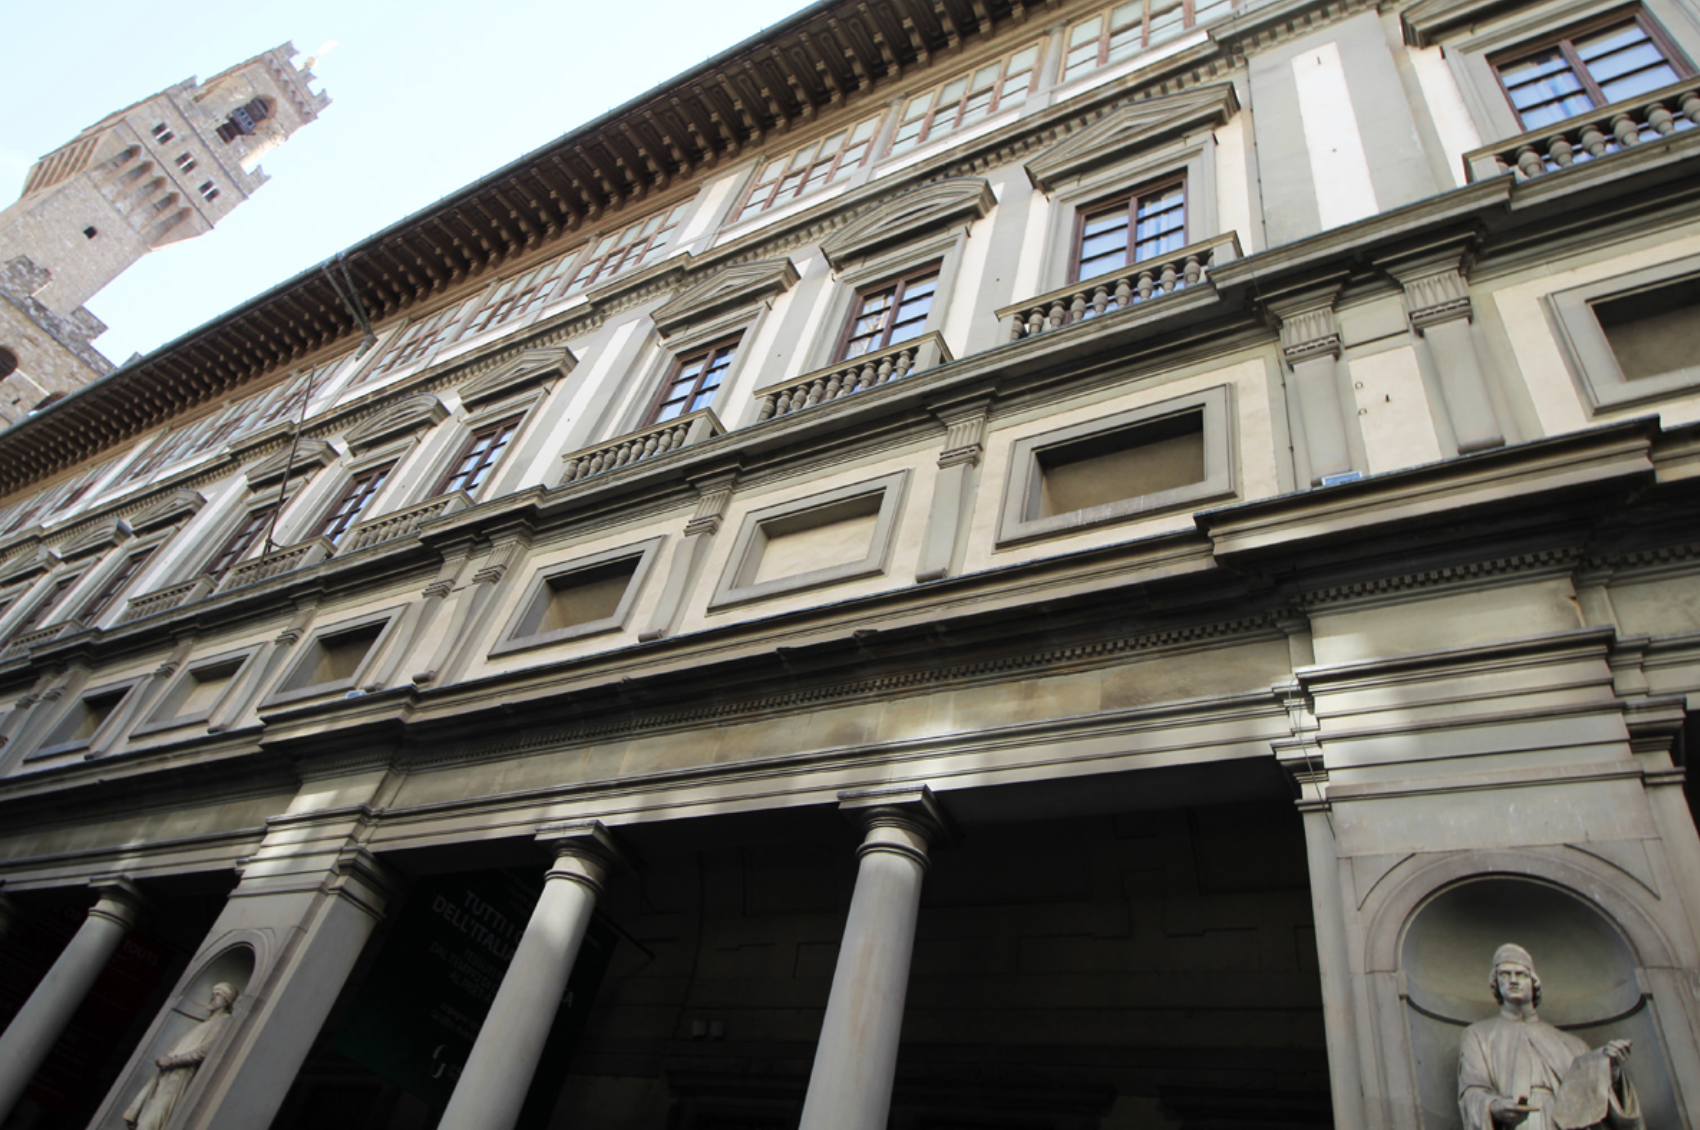 The Uffizi Gallery: Second Floor Gallery